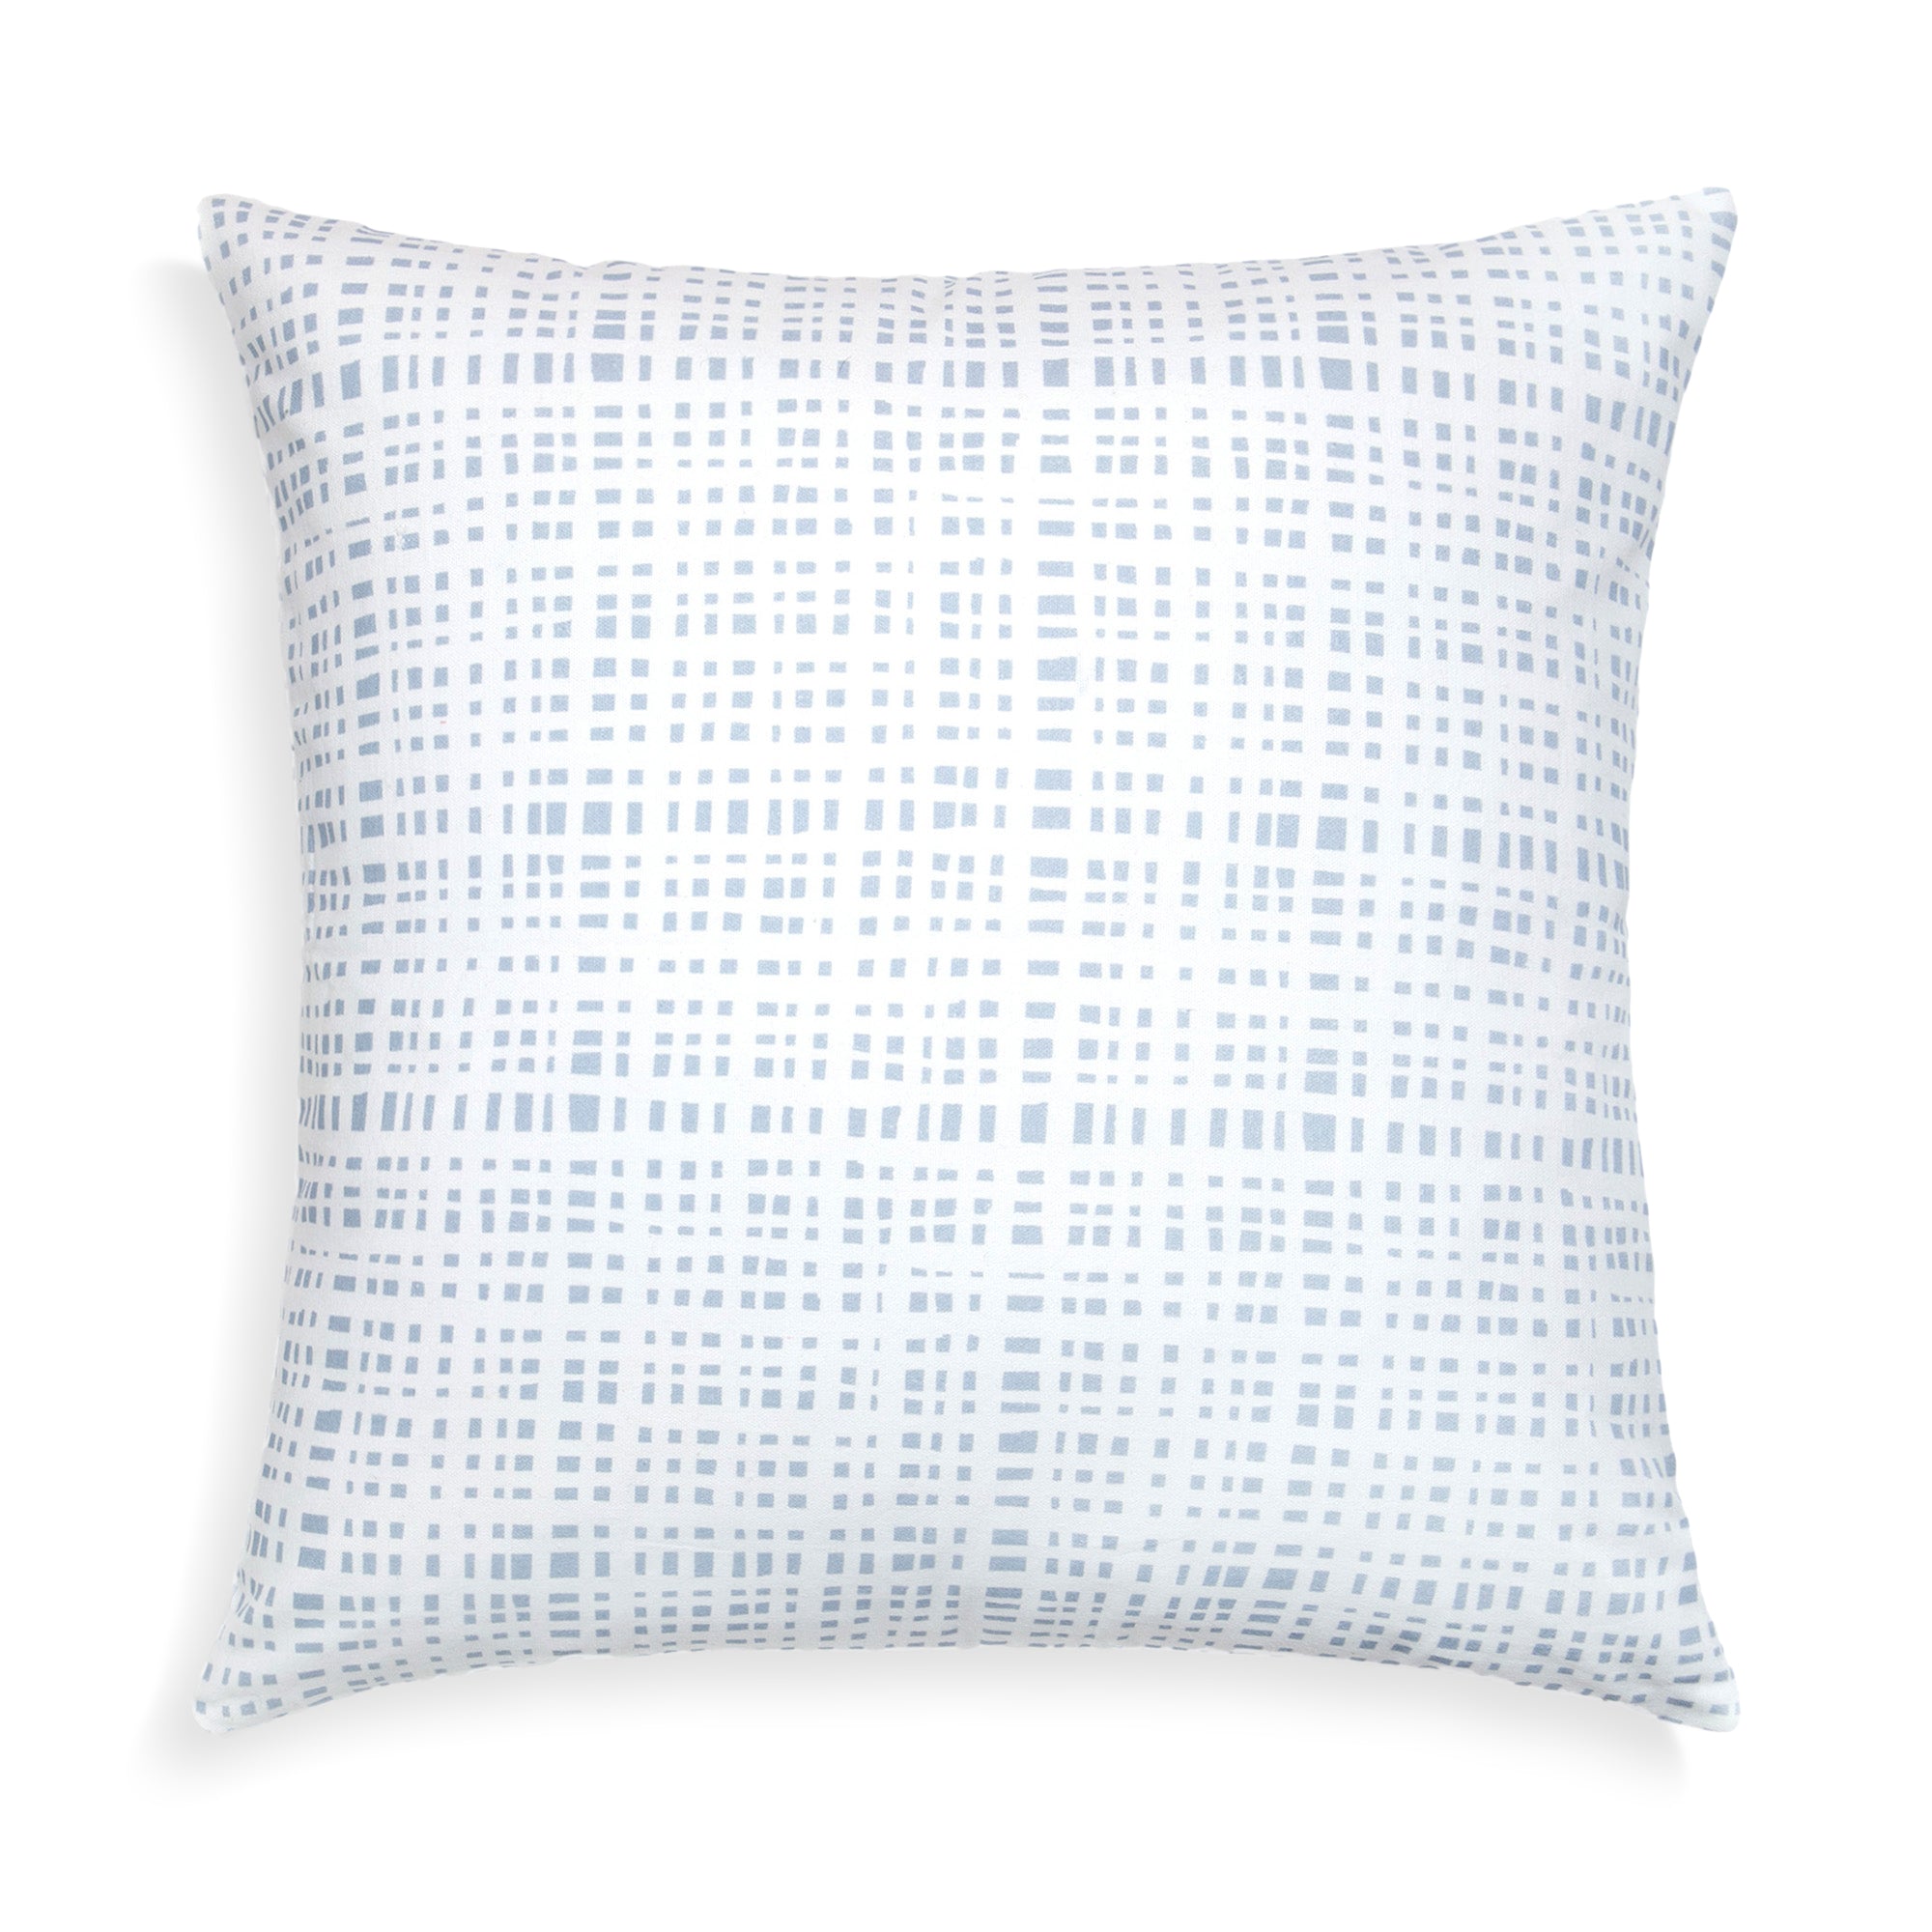 Sky Blue Gingham Printed Pillow